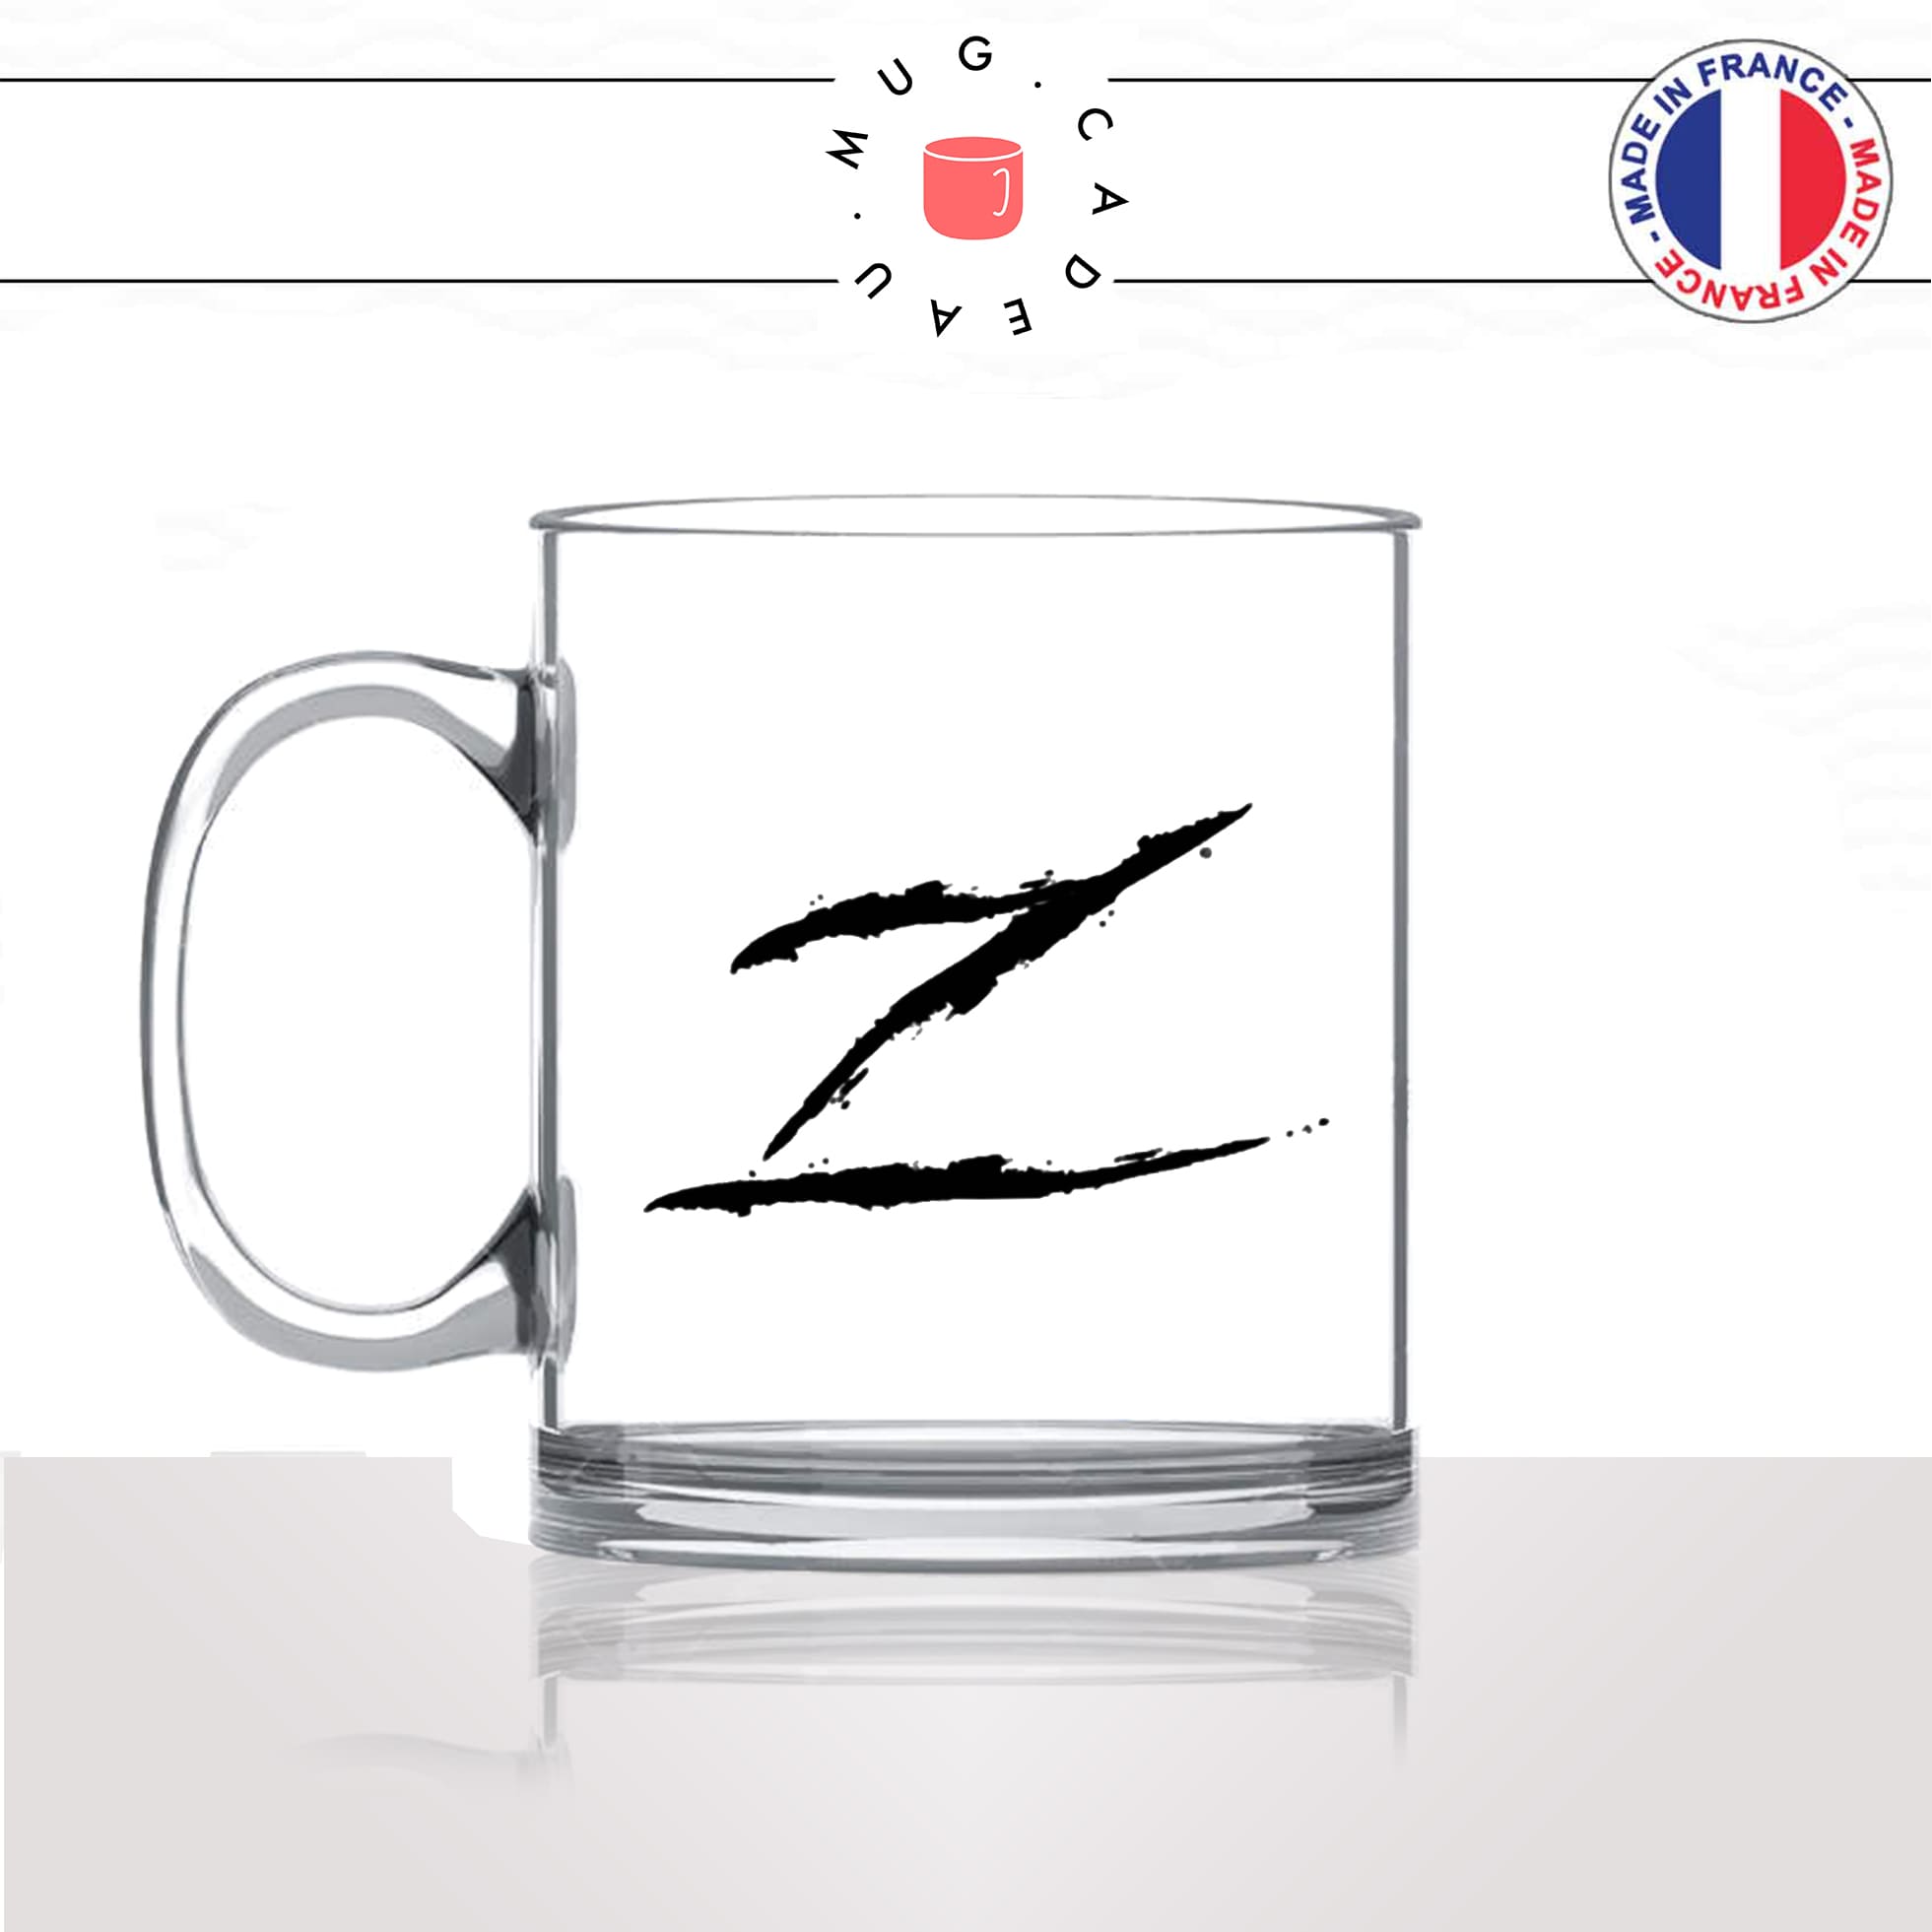 mug-tasse-en-verre-transparent-glass-z-zorro-generation-film-banderas-héro-zemmour-2022-homme-femme-humour-fun-cool-idée-cadeau-original